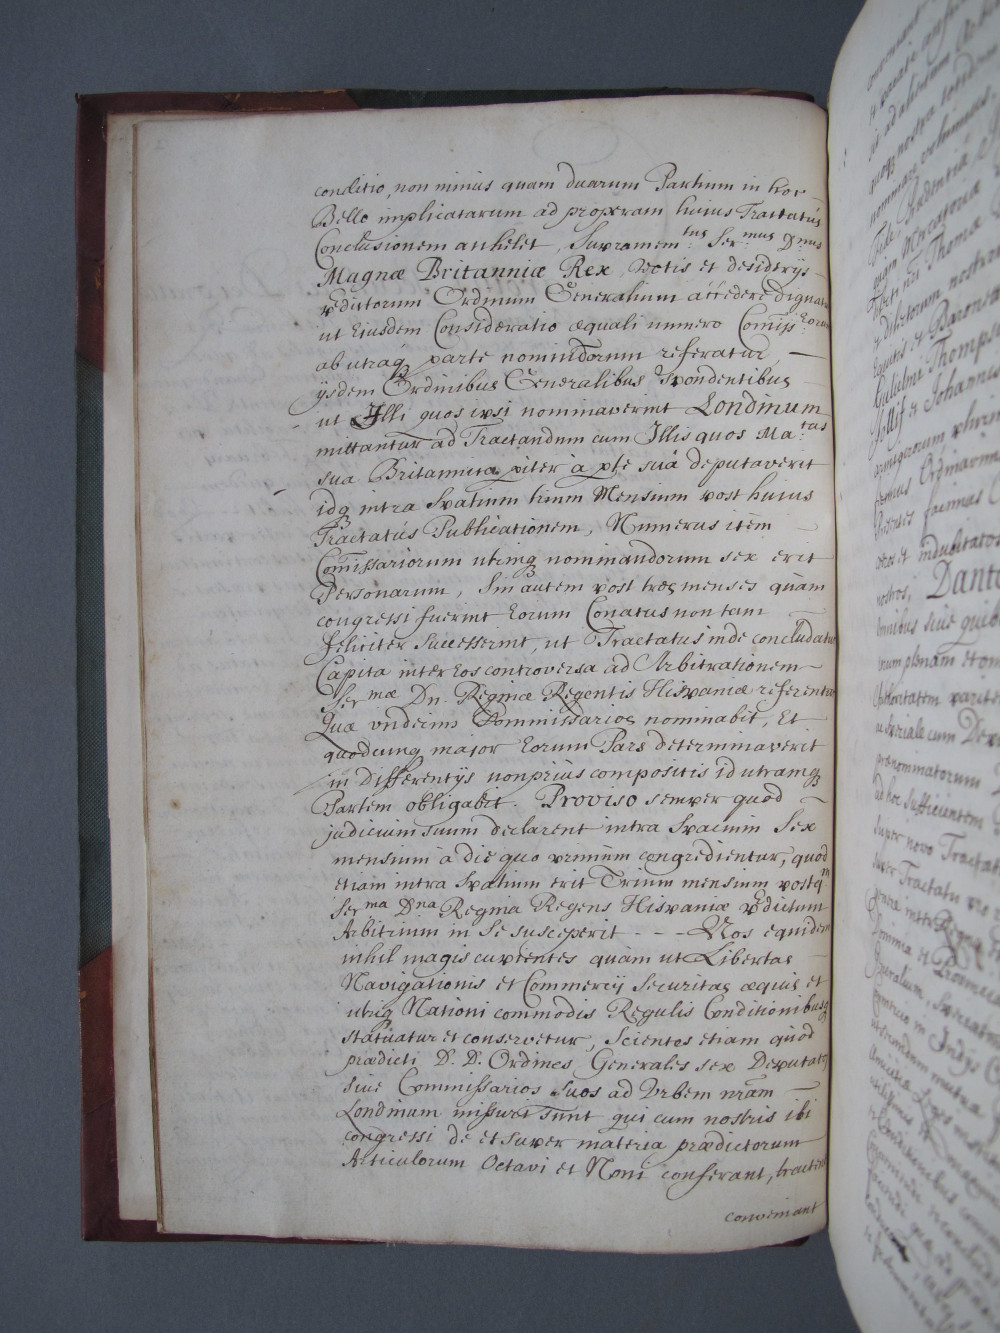 Folio 2 verso